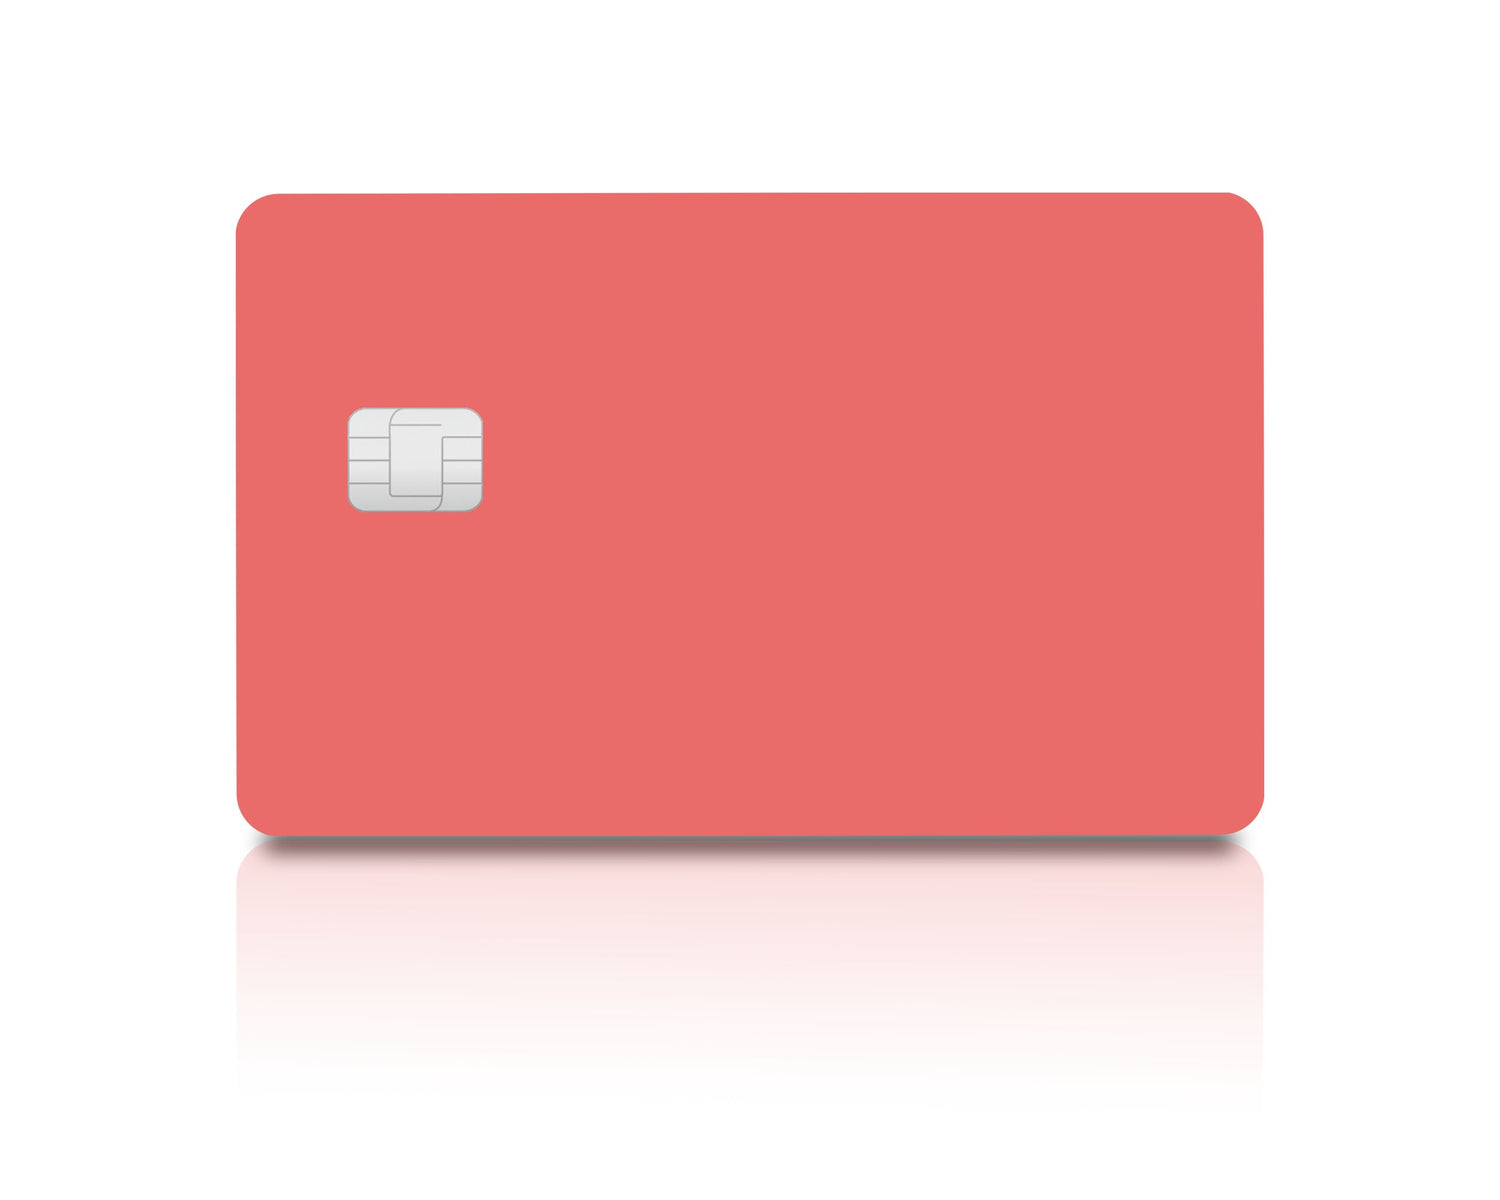 credit card skin template